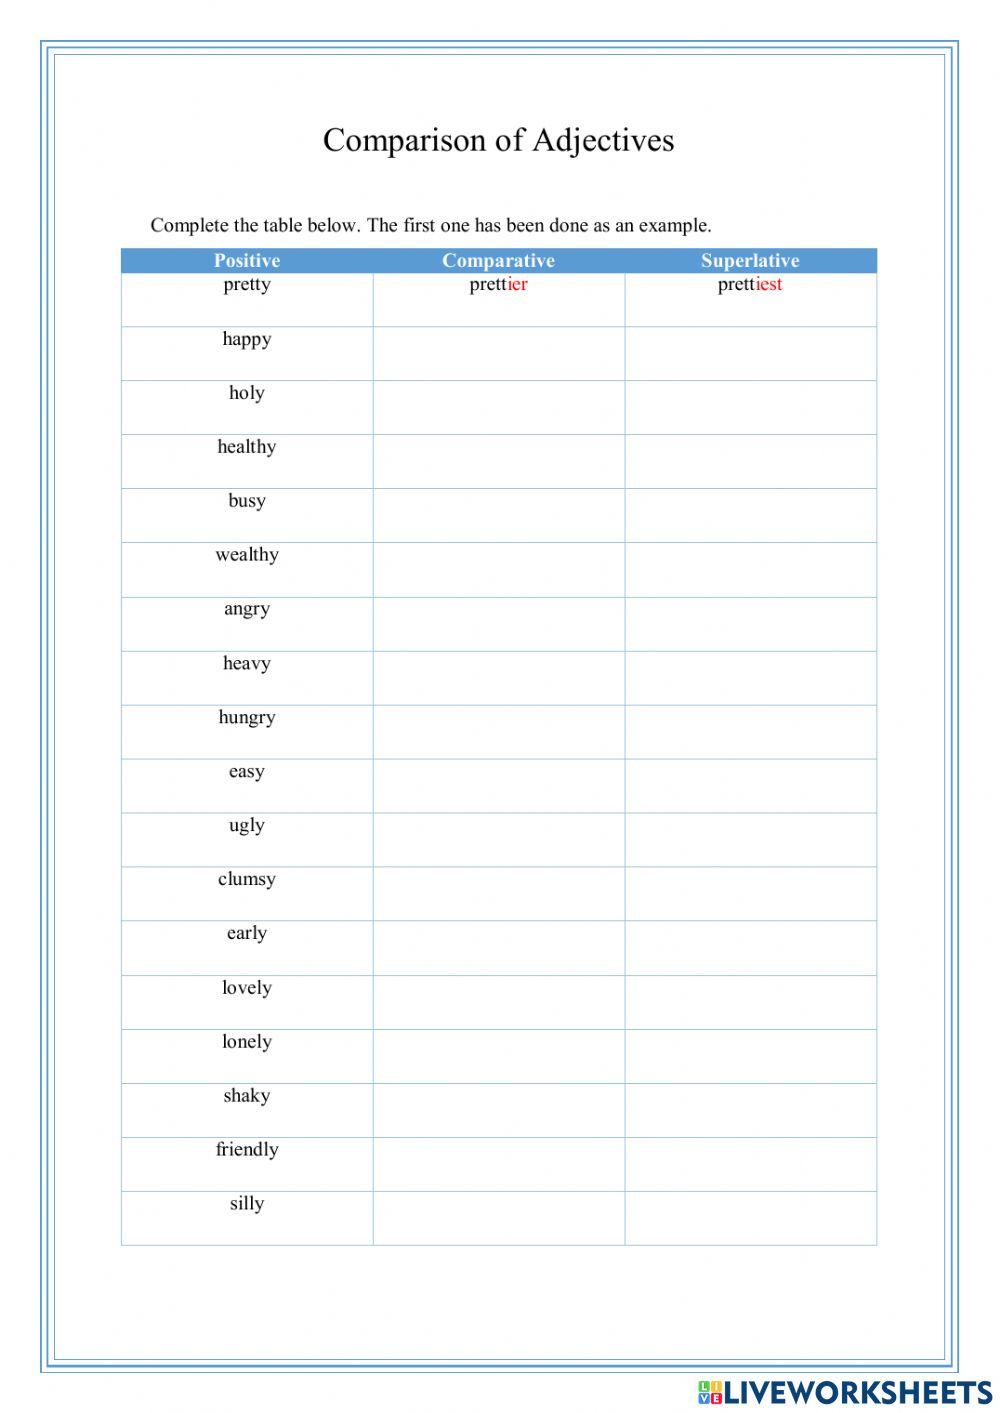 Comparison of Adjectives Live Worksheet03 (y to i)